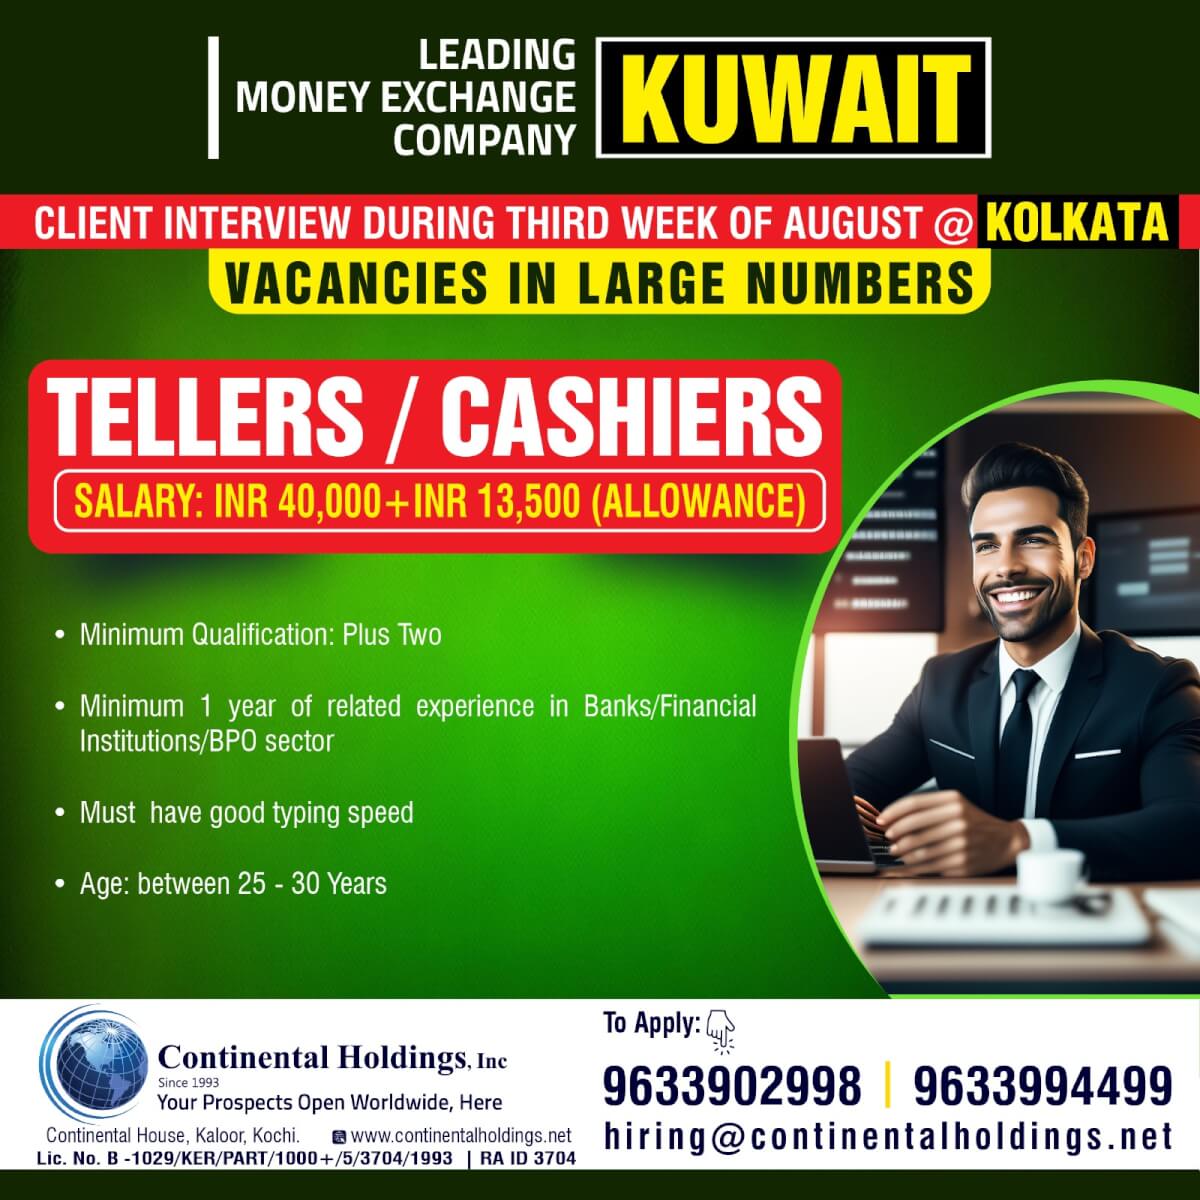 Hiring for Kuwait - Client Interview at Kolkata